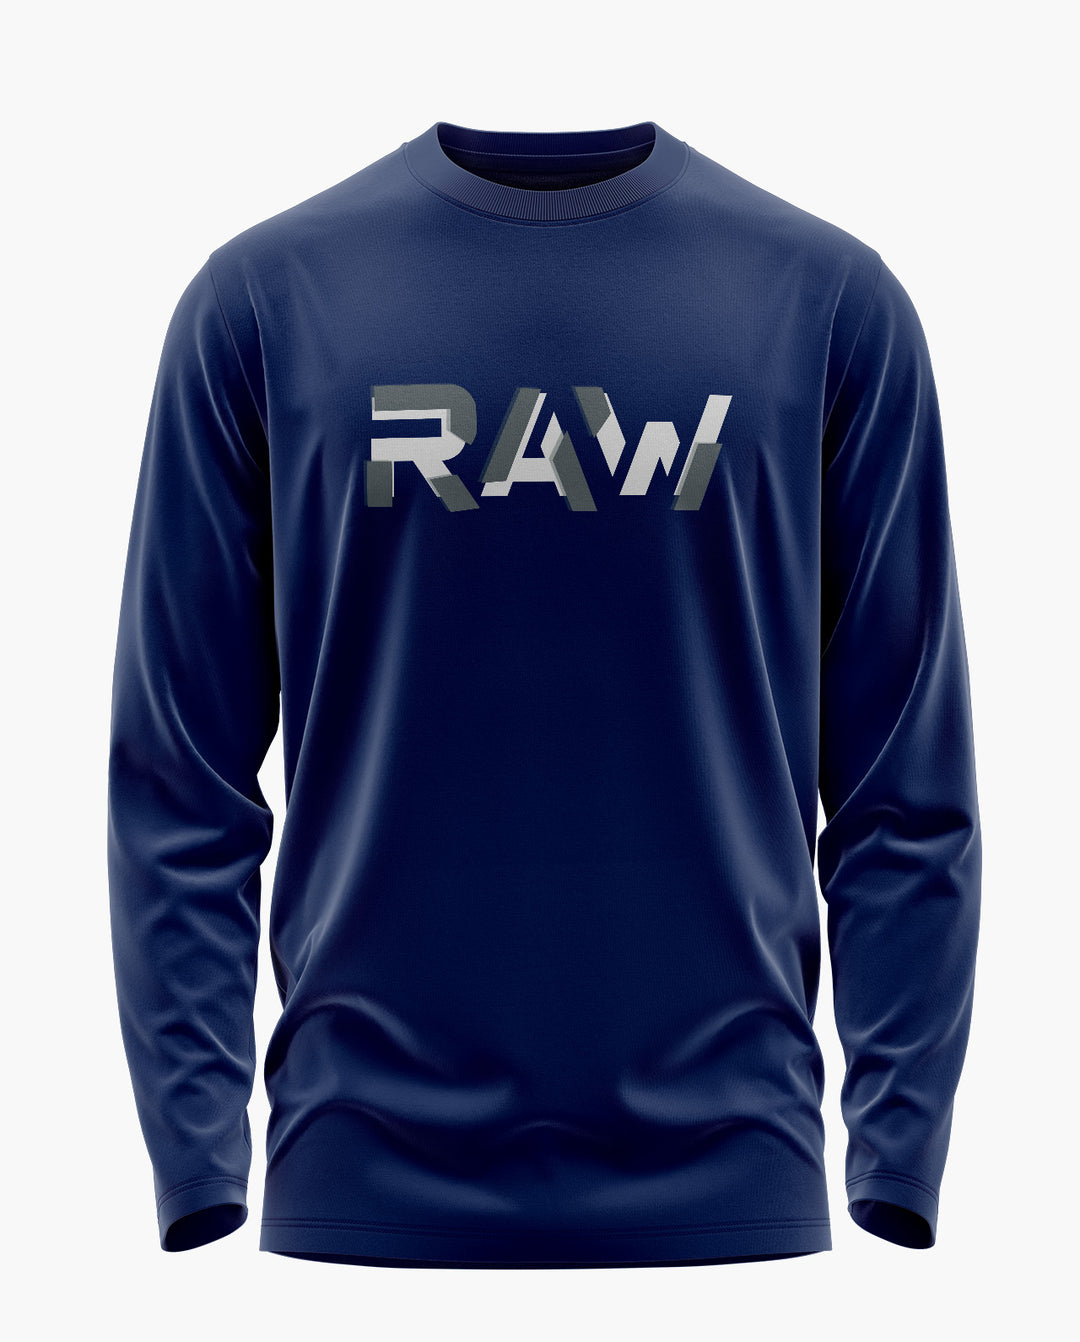 Raw Full Sleeve T-Shirt